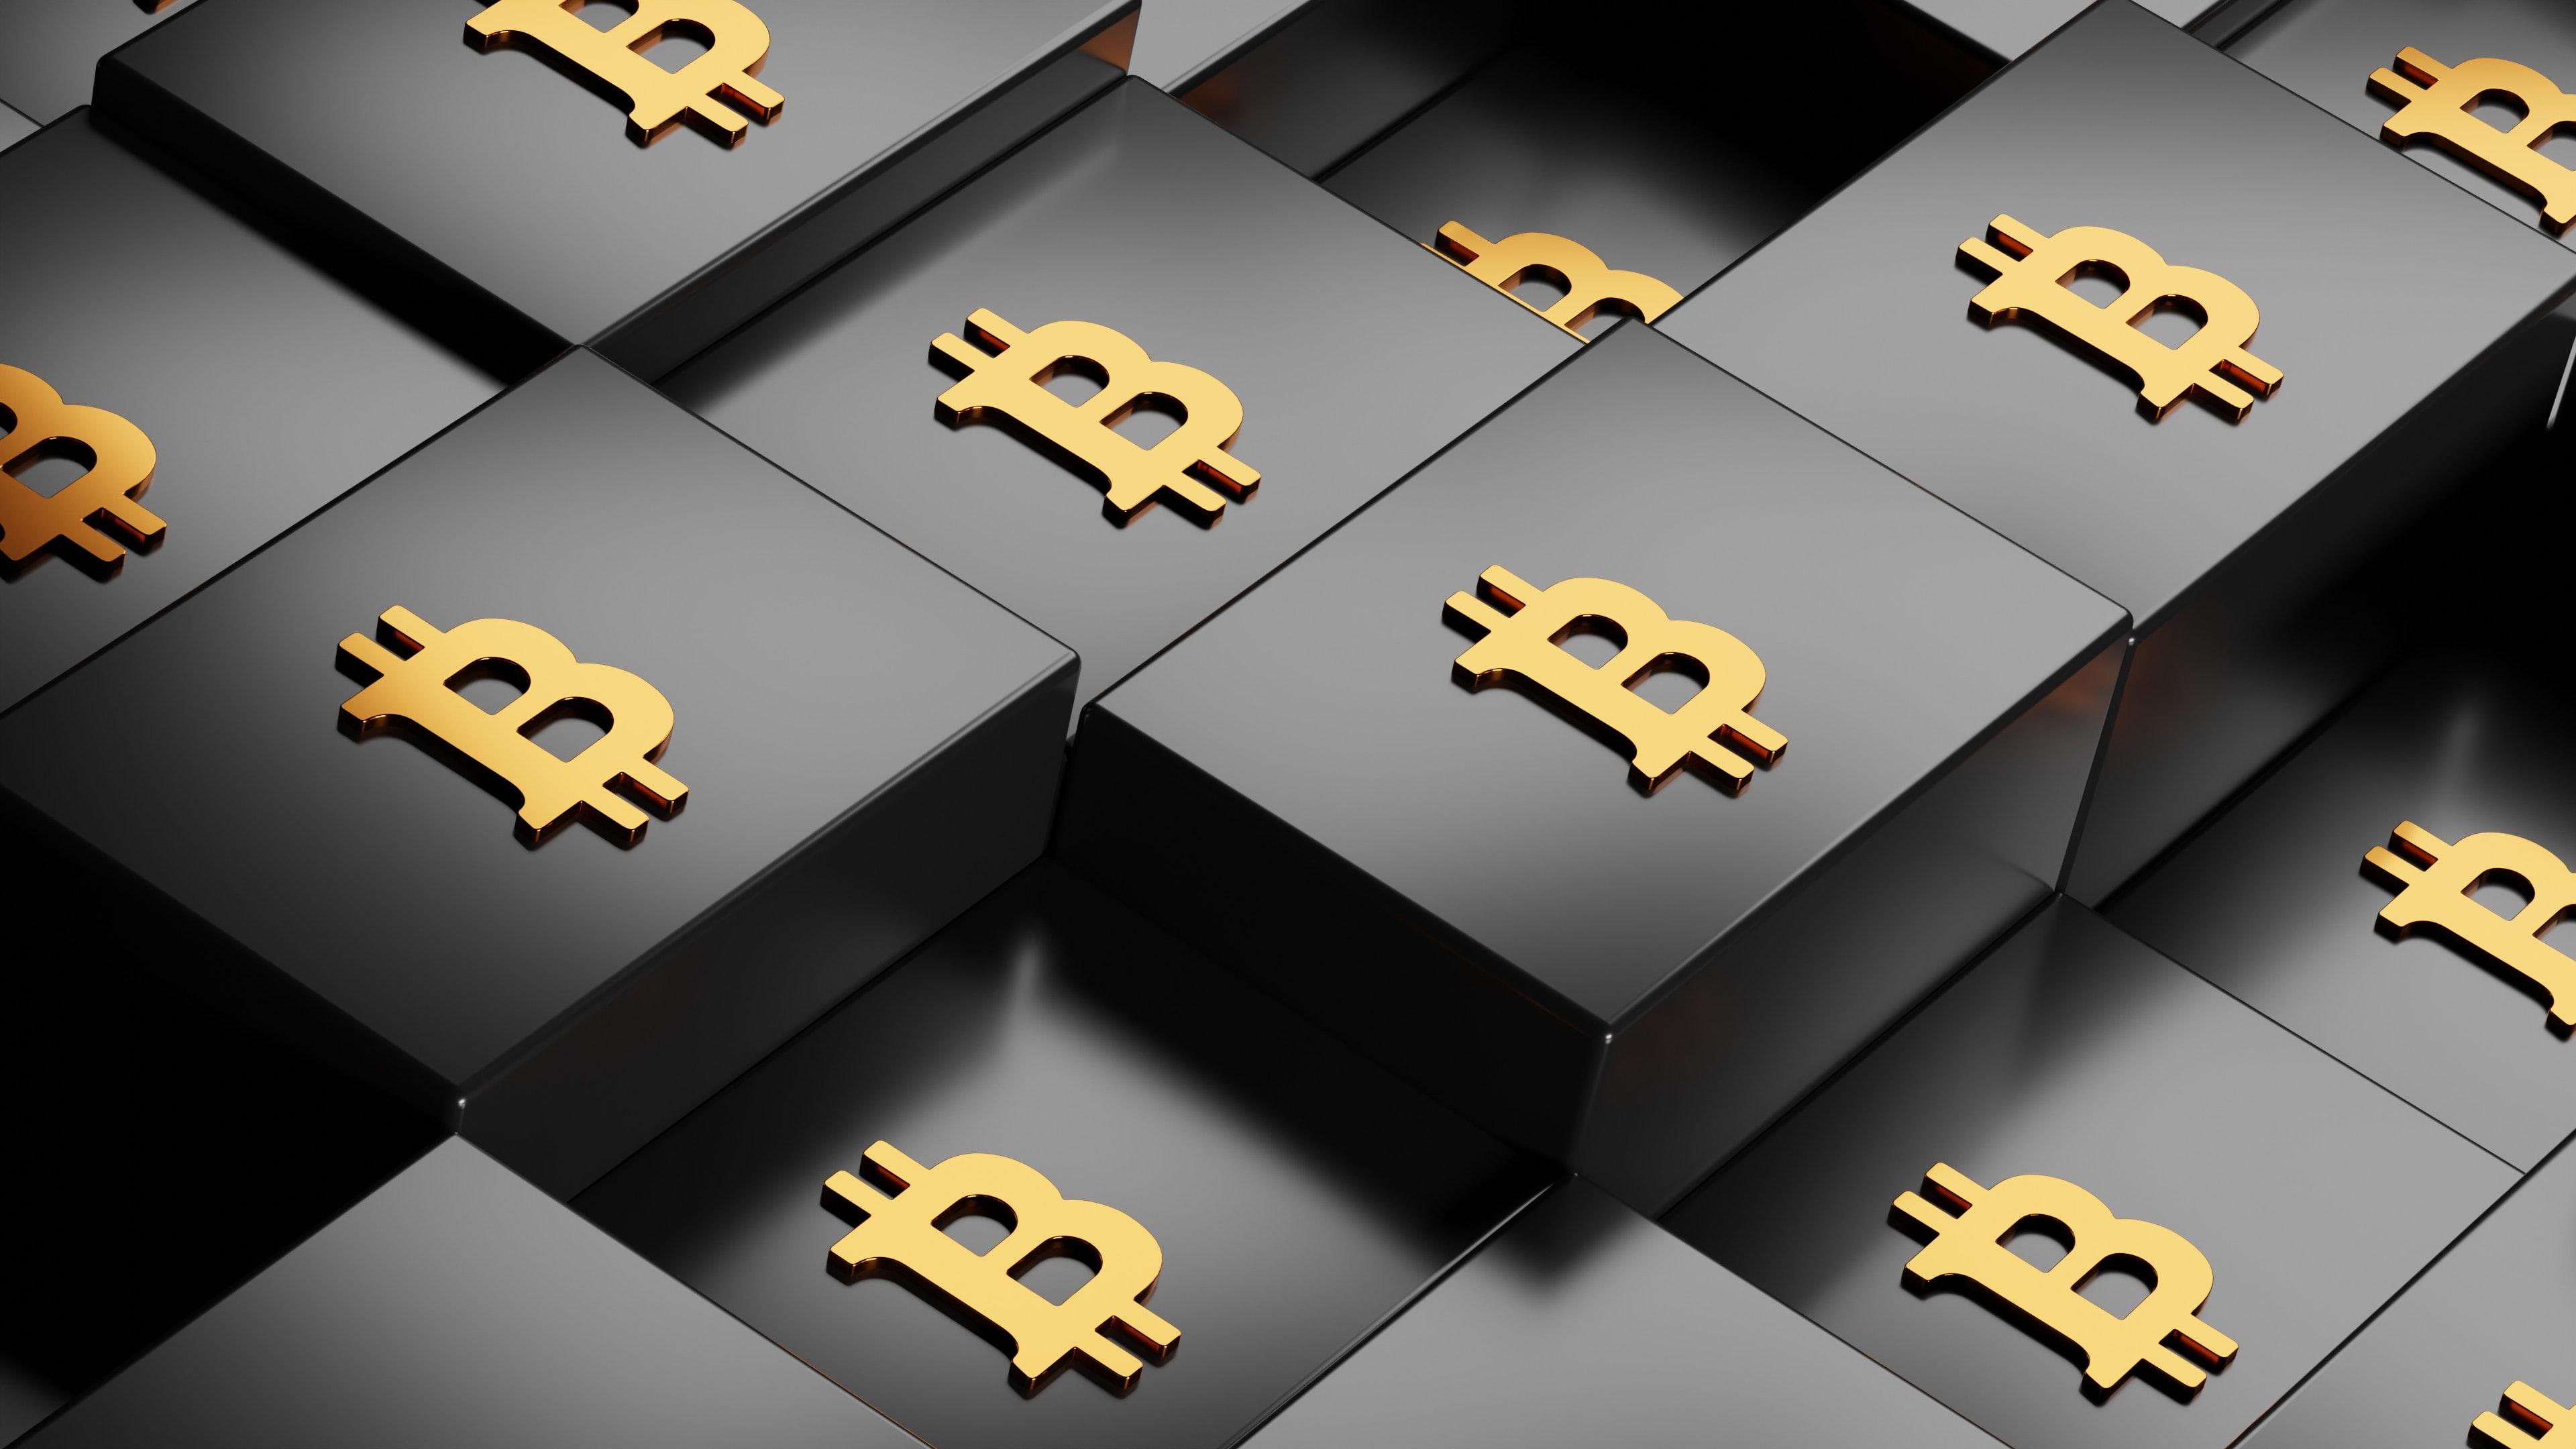 Bitcoin symbols on black boxes.